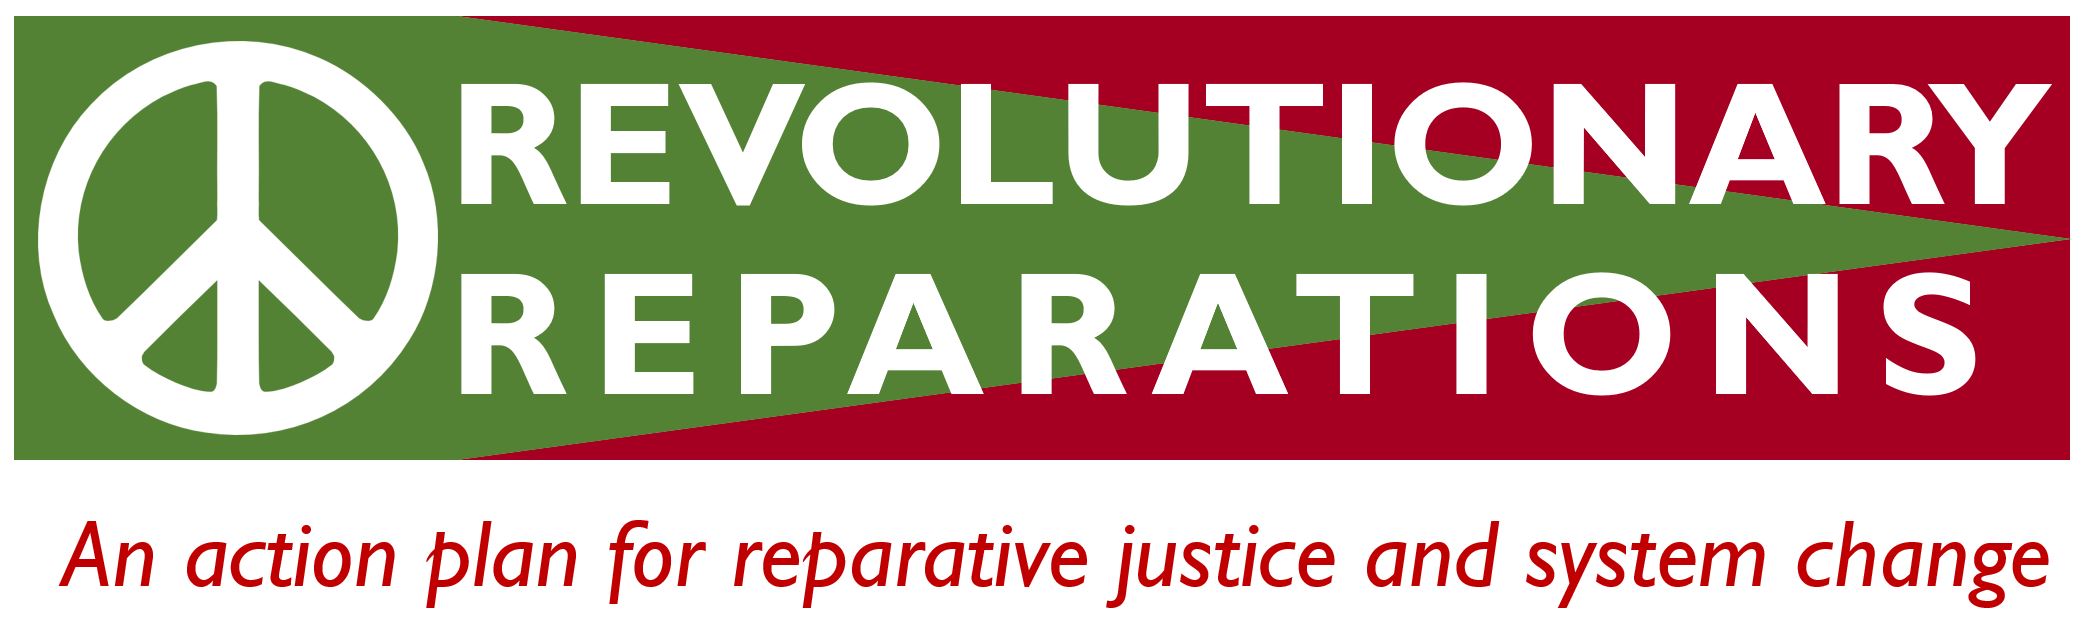 Revolutionary Reparations Logo